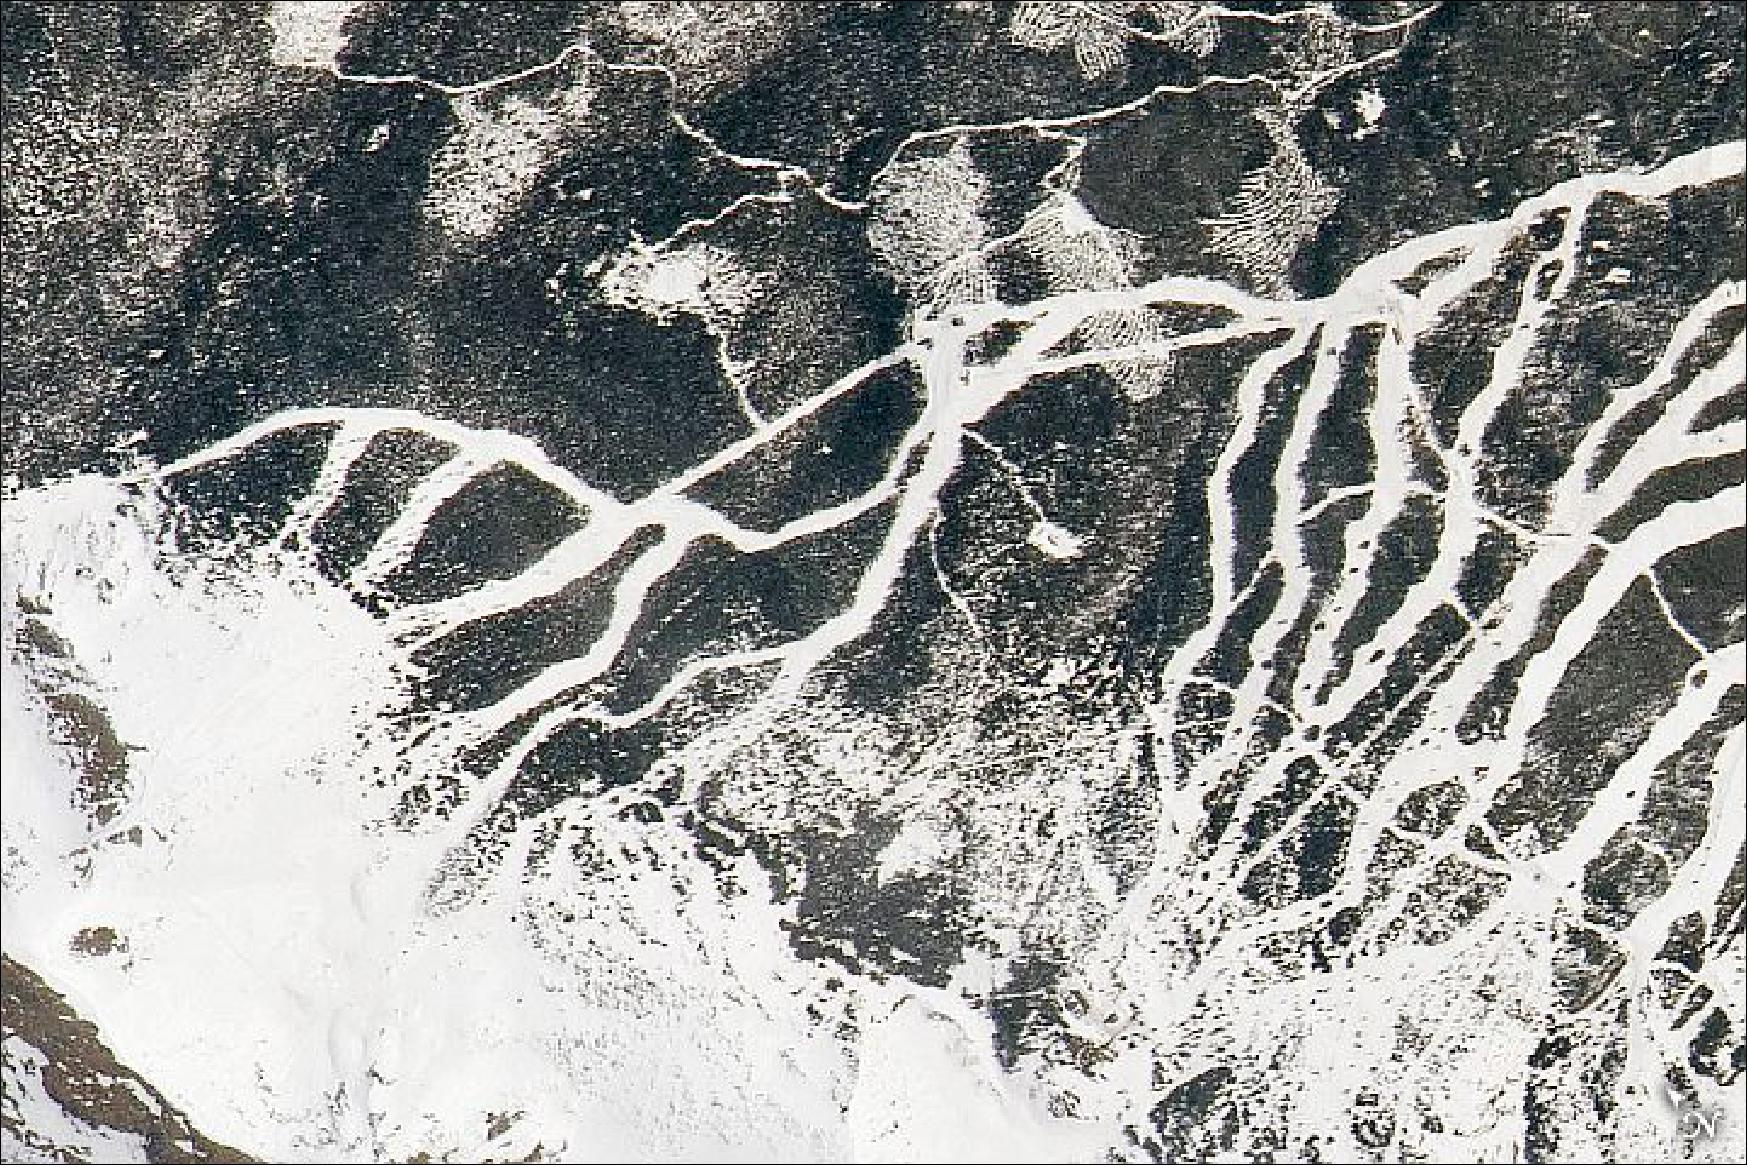 Figure 86: Detail image of the Breckenridge ski slopes (image credit: NASA Earth Observatory)